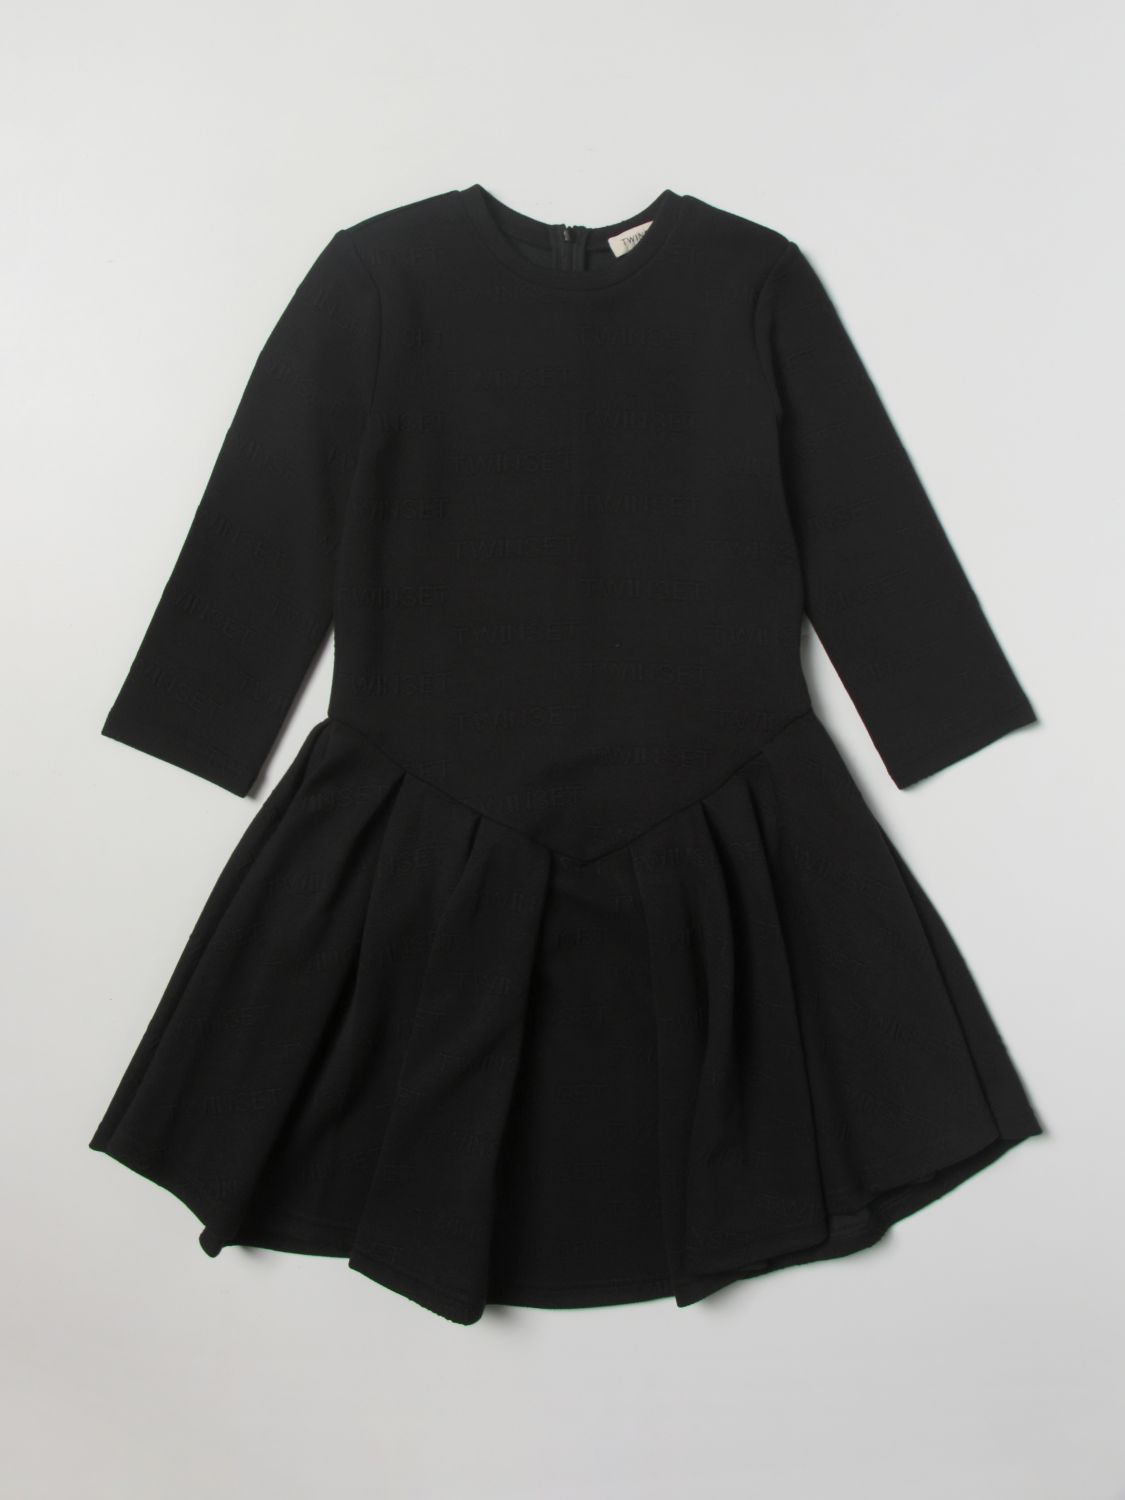 TWINSET: dress for girls - Black | Twinset dress 222GJ2270 online at ...